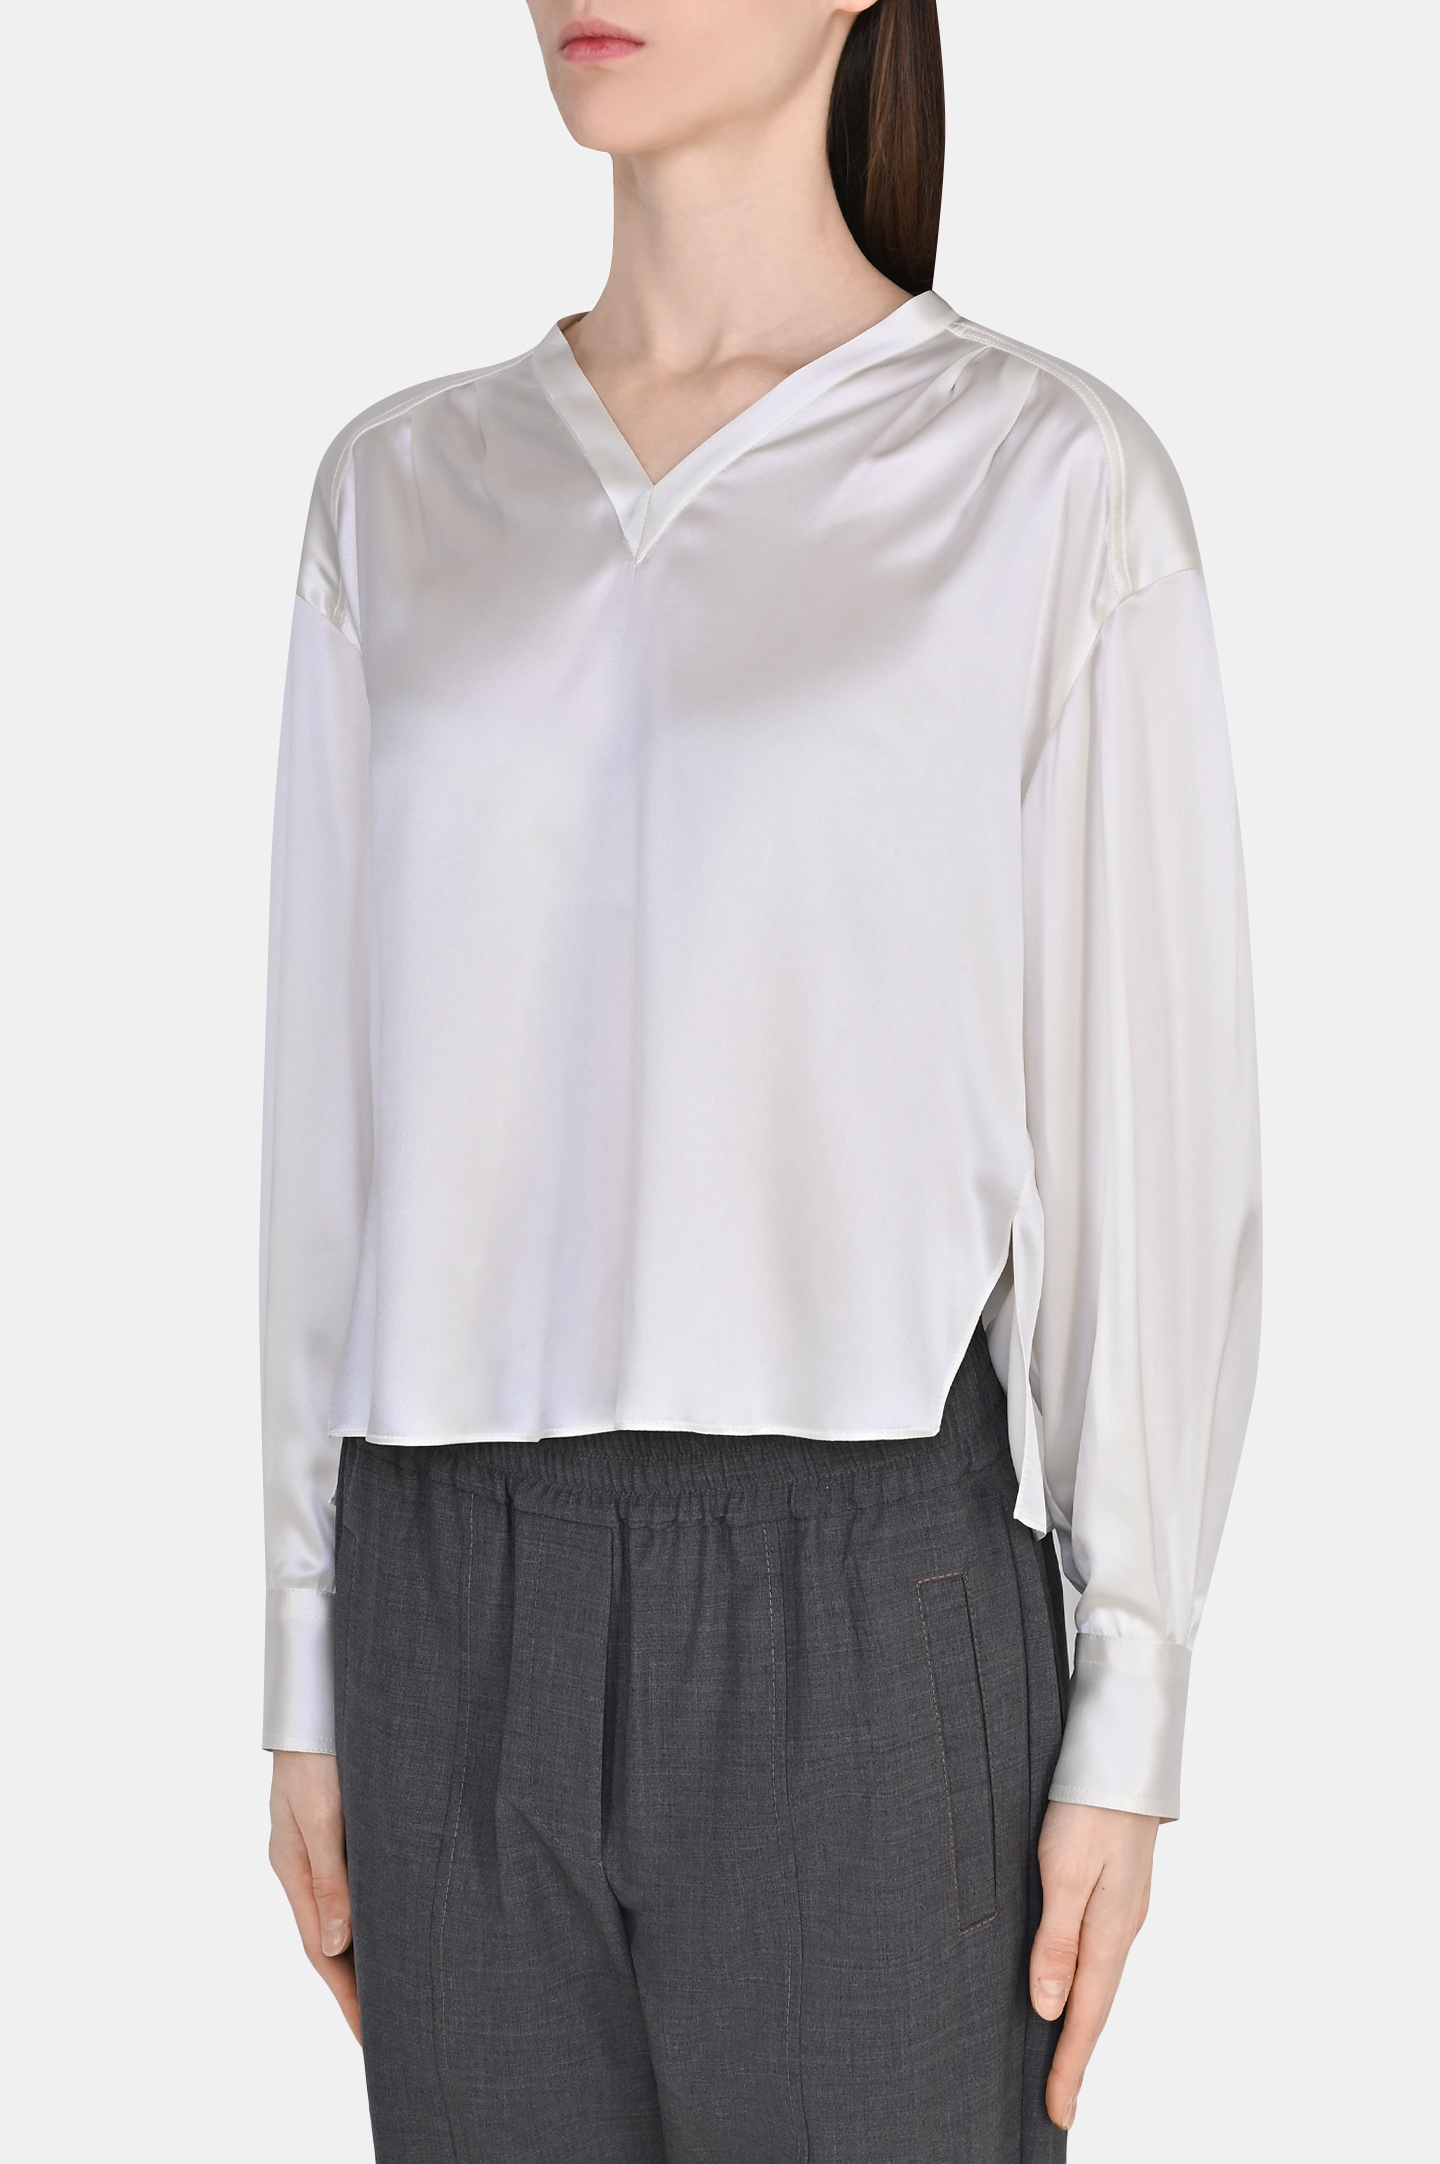 Блуза BRUNELLO  CUCINELLI MPC59BL100, цвет: Молочный, Женский